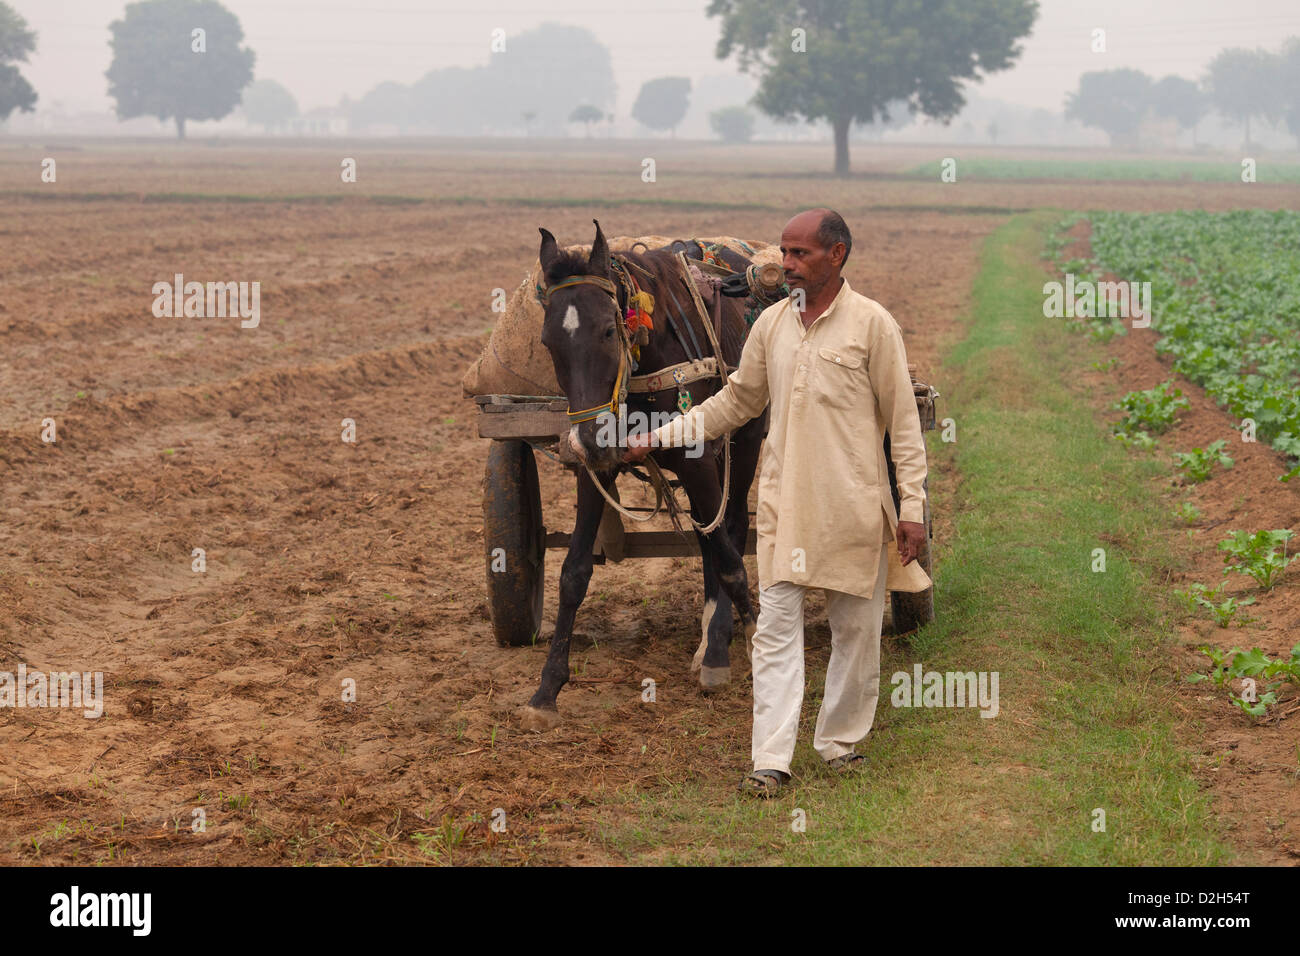 india, Uttar Pradesh, farmer leading horse and cart through field Stock Photo